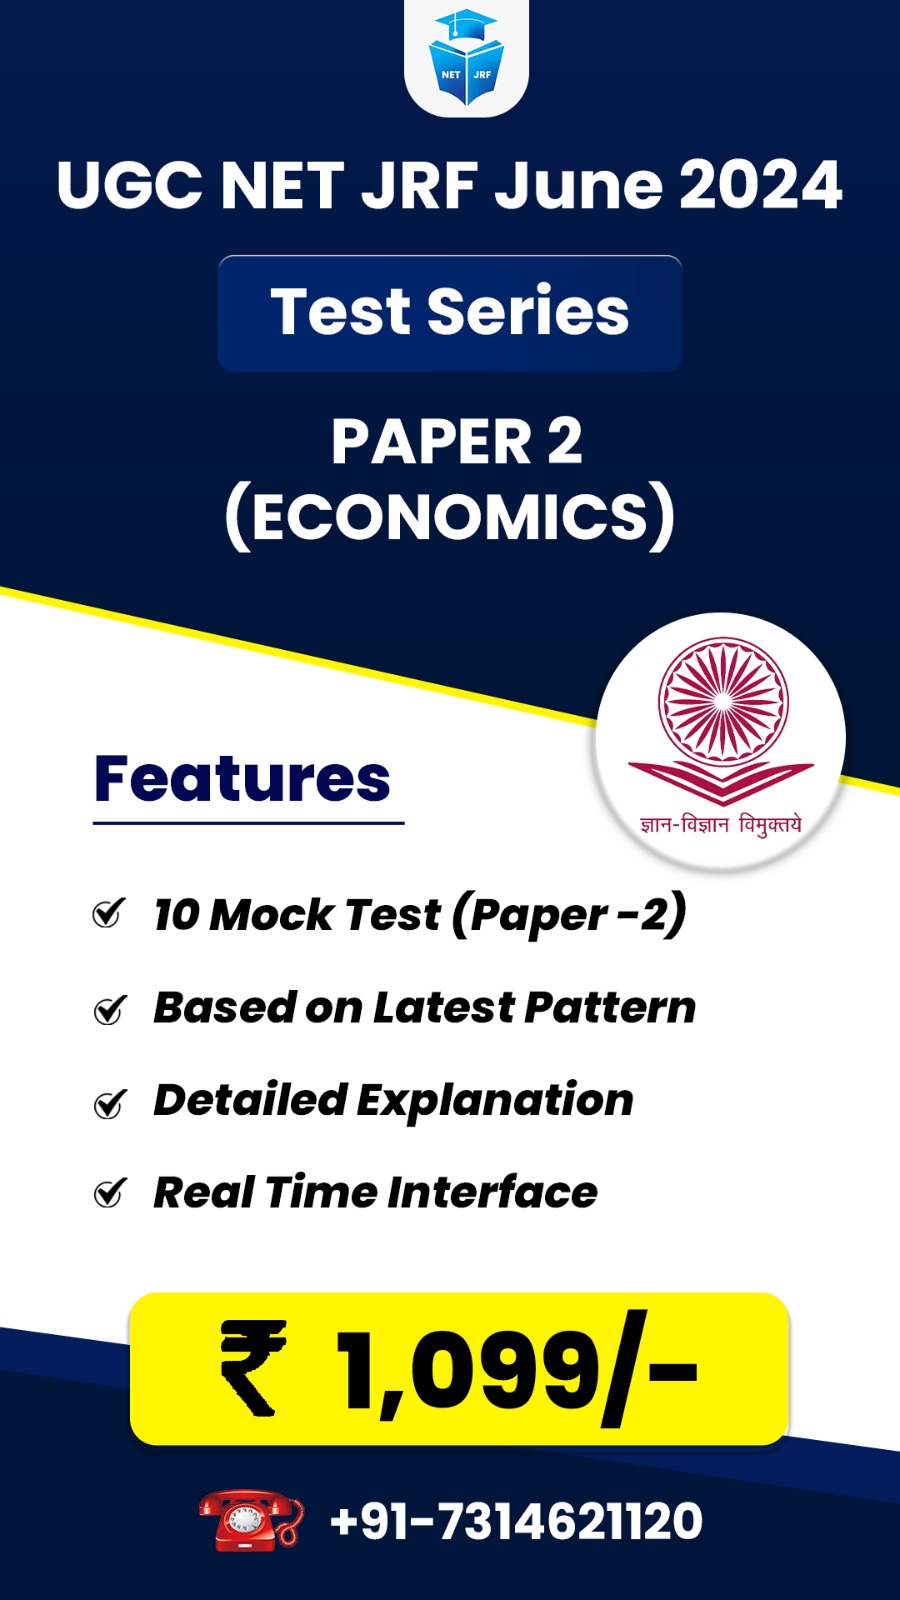 Economics (Paper 2) Test Series for June 2024